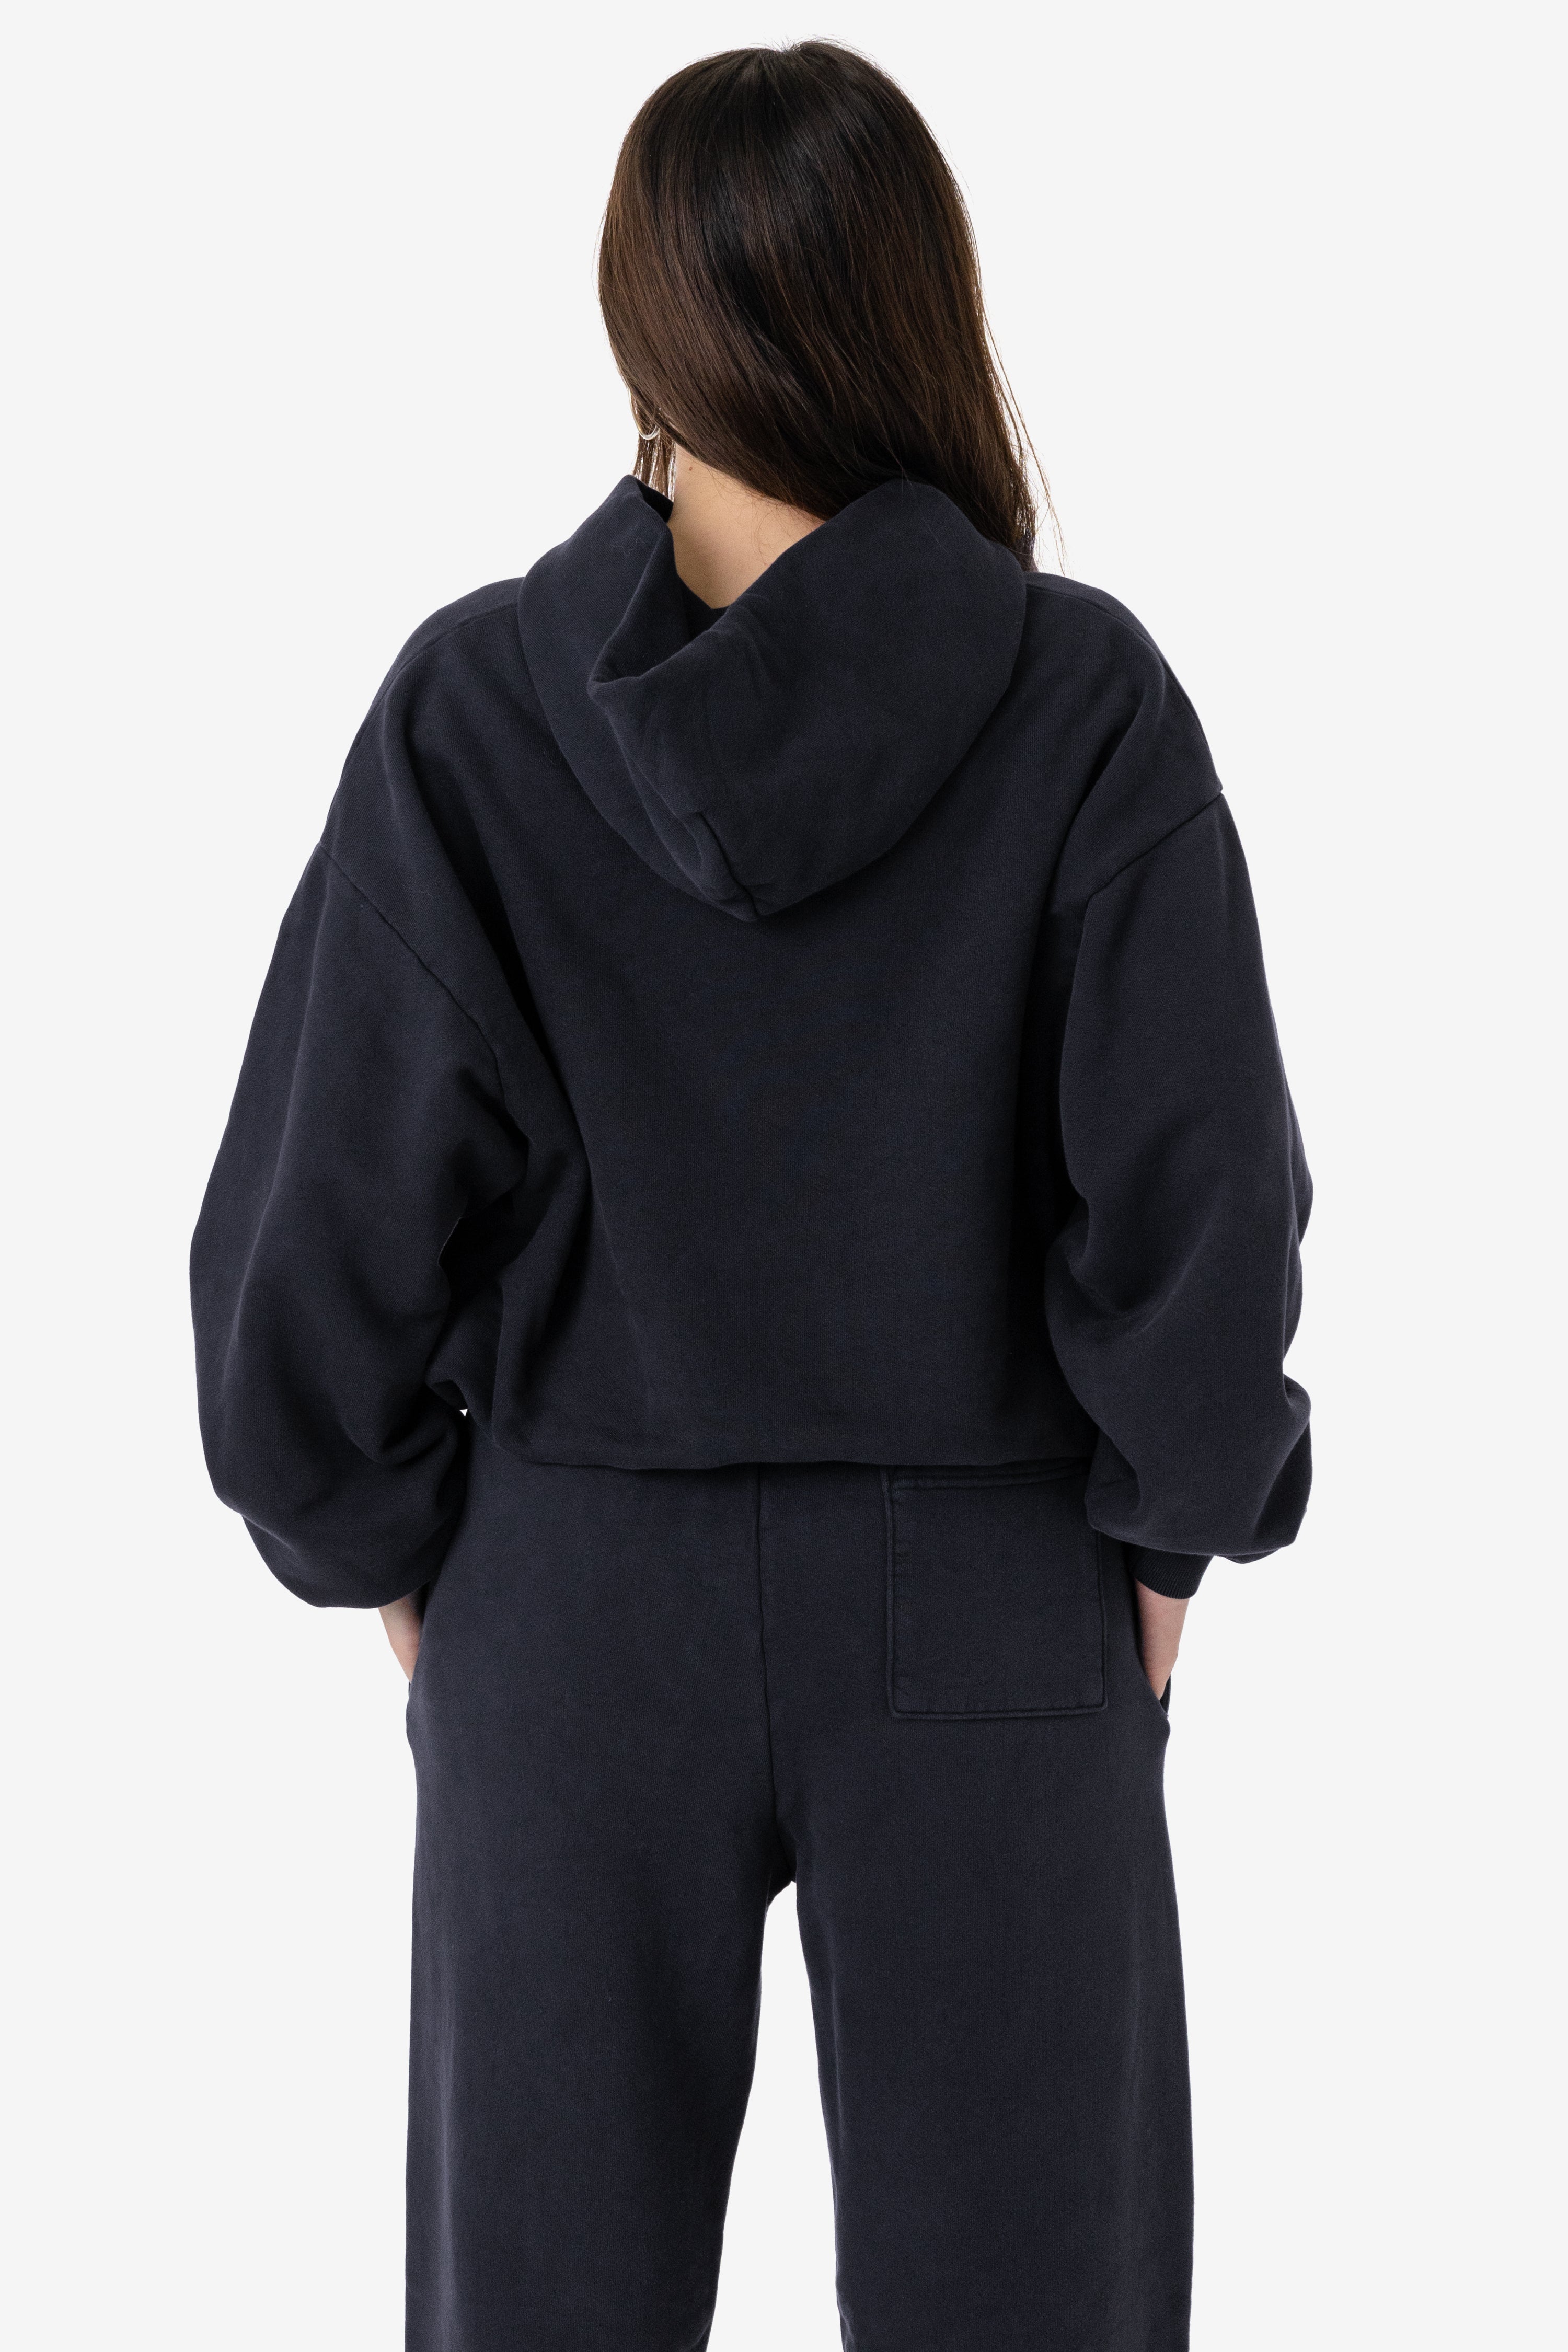 PLU09GD - 16oz. Garment Dye Plush Fleece Hooded Pullover Sweatshirt